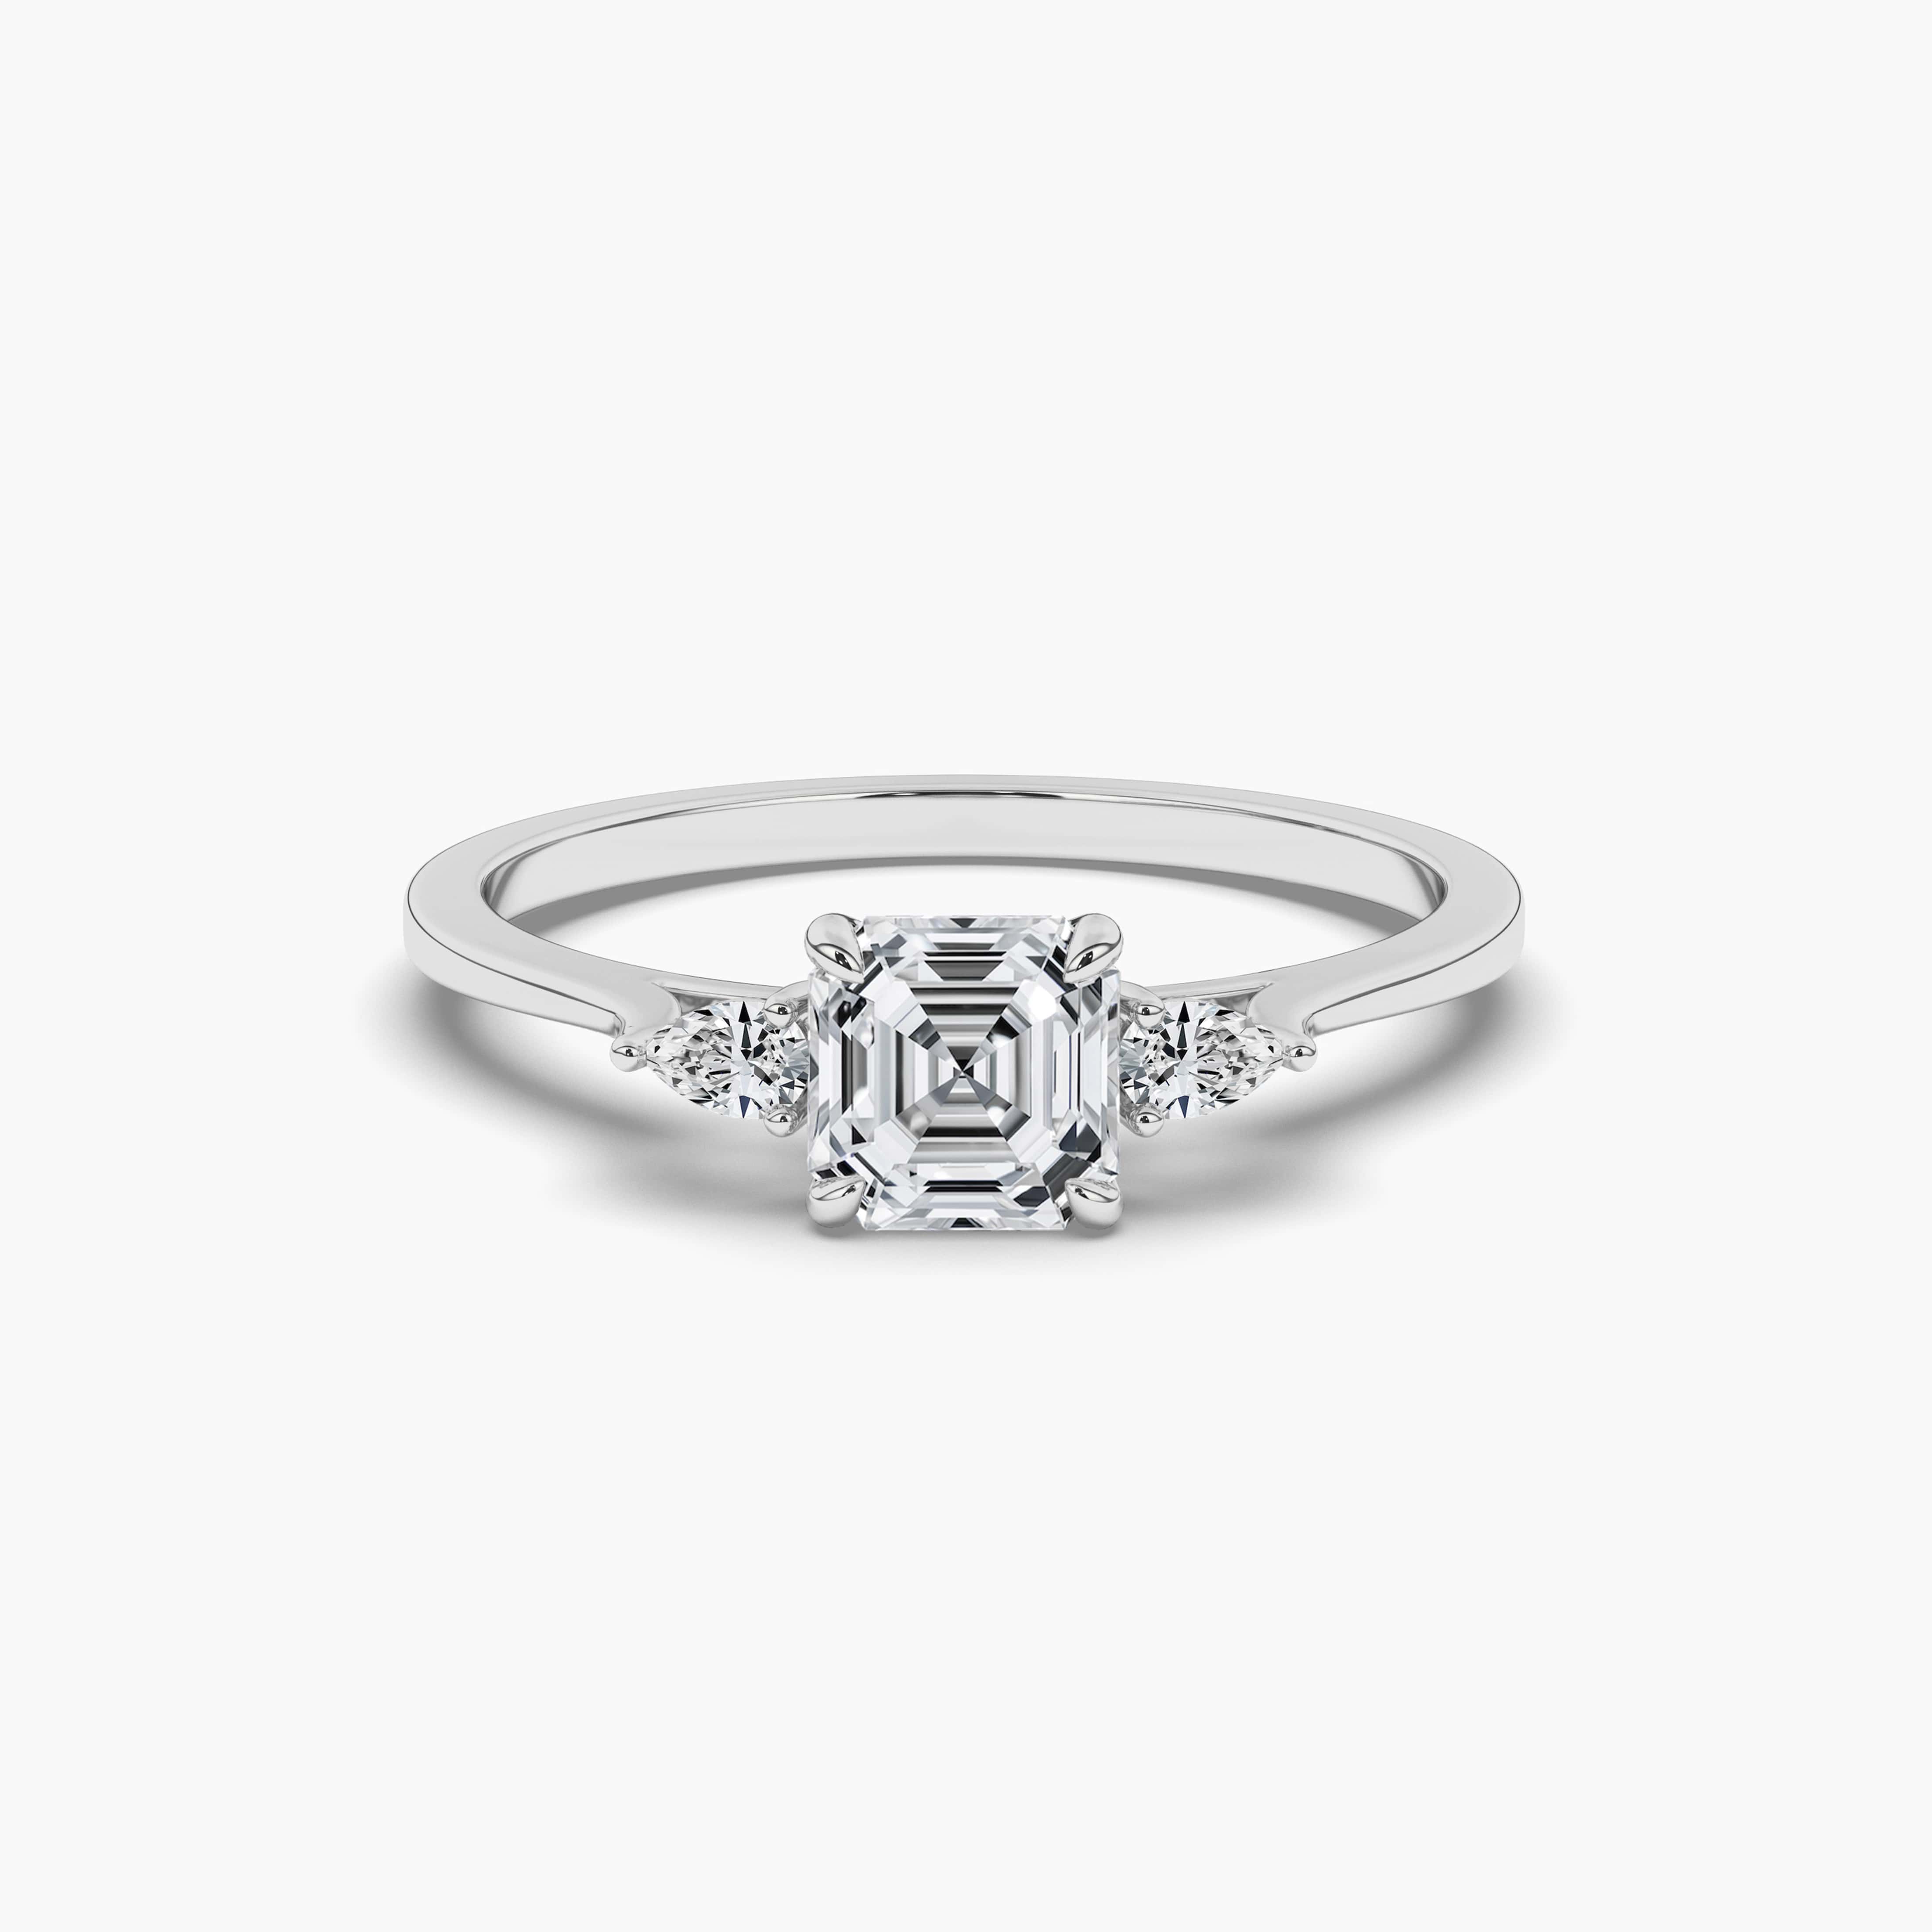 Asscher Cut White Moissanite Solitaire Wedding Ring in White Gold